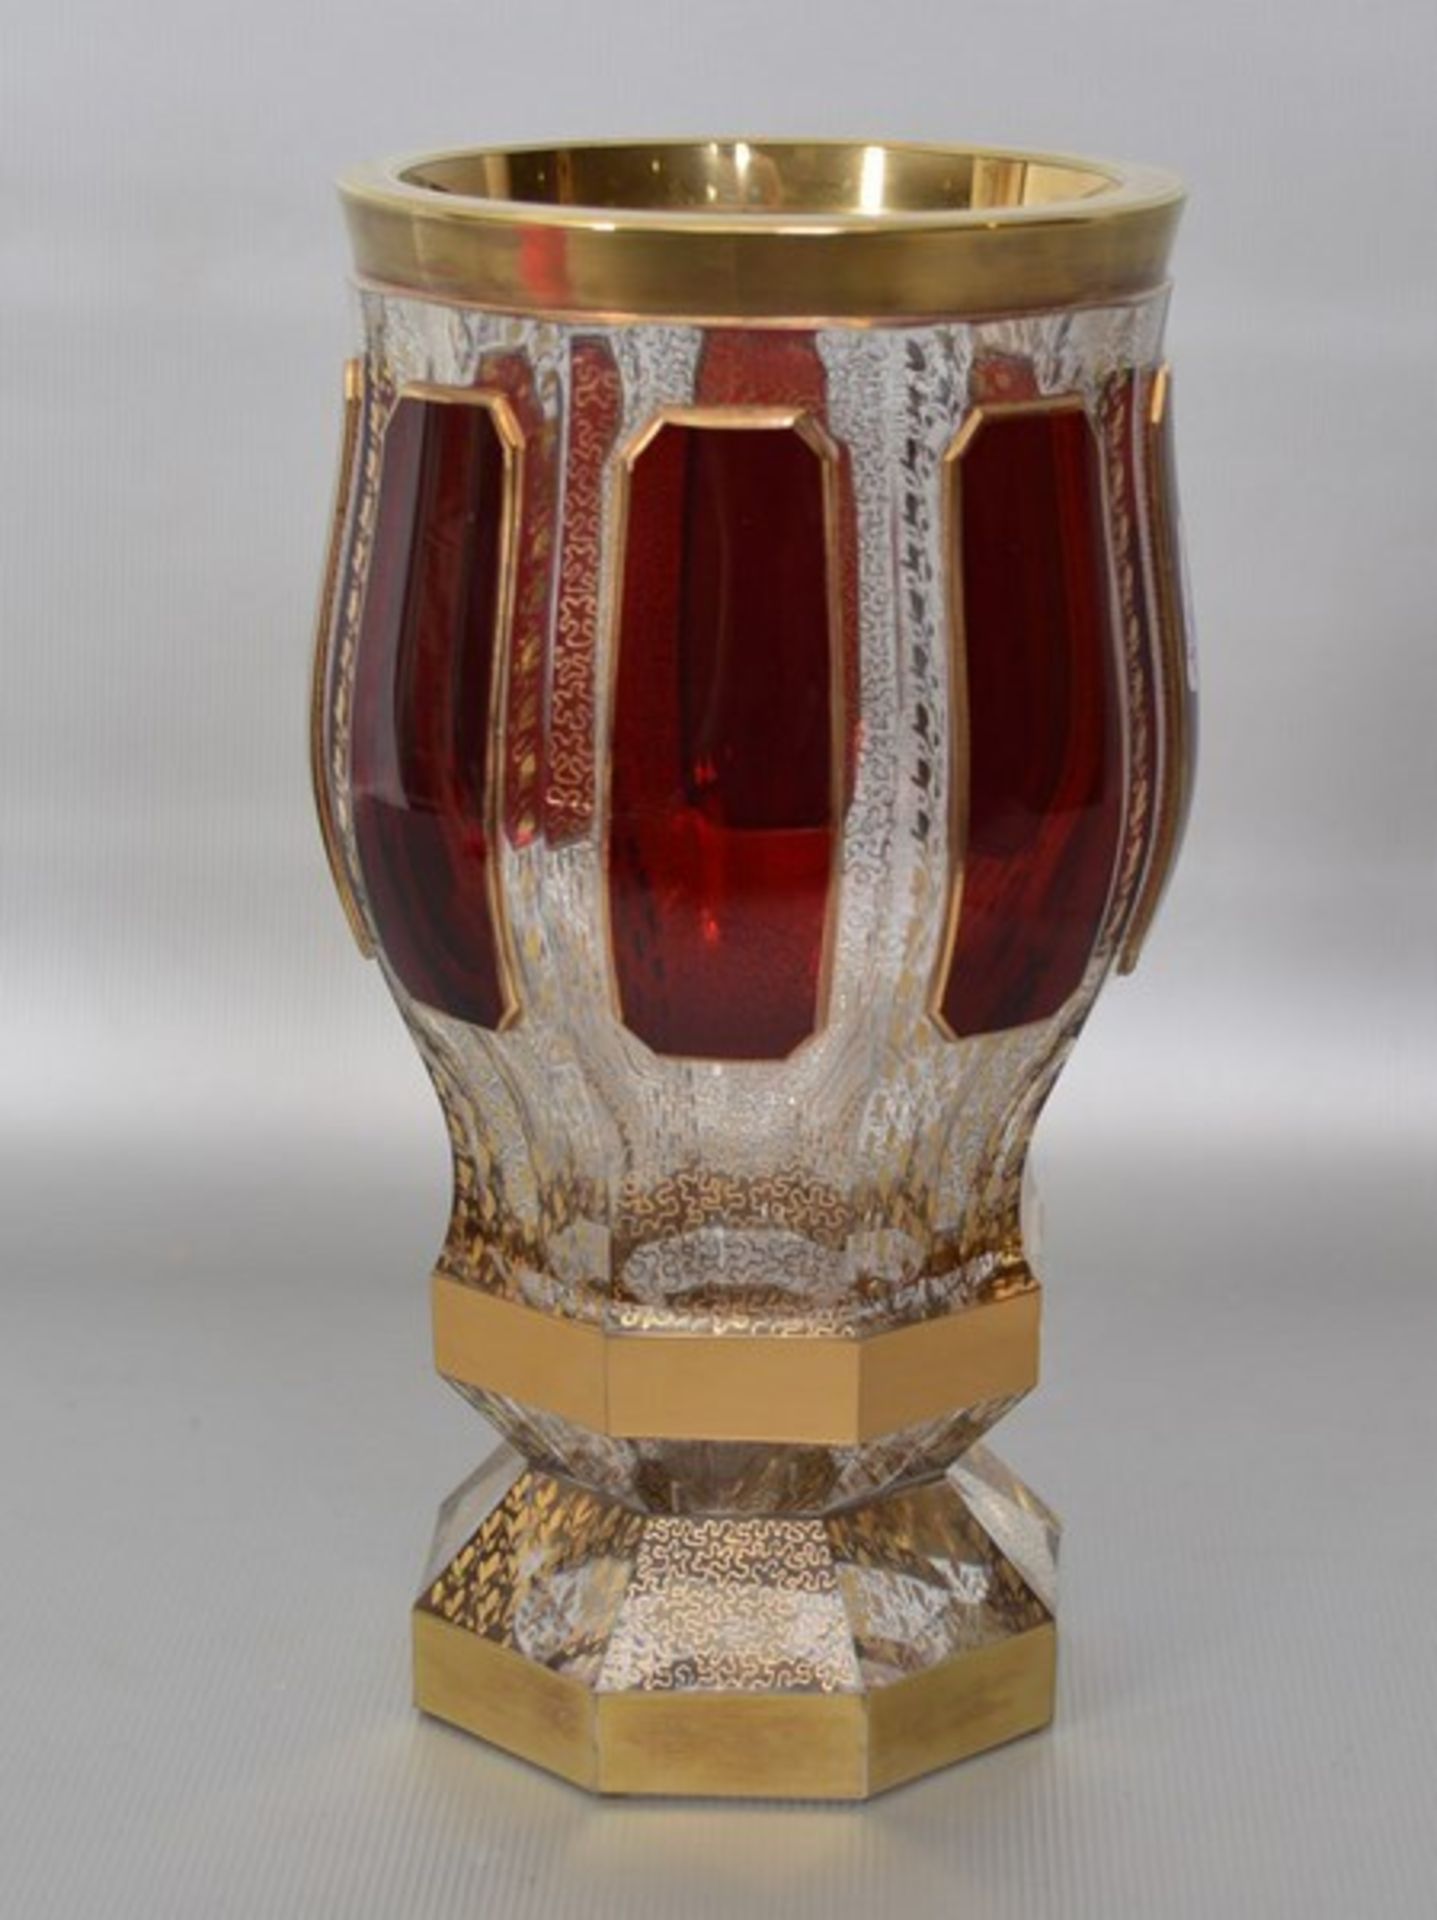 Zierglas farbl. Glas, facettiert geschliffen, gold verziert, Medaillons rotes Glas, H 16 cm